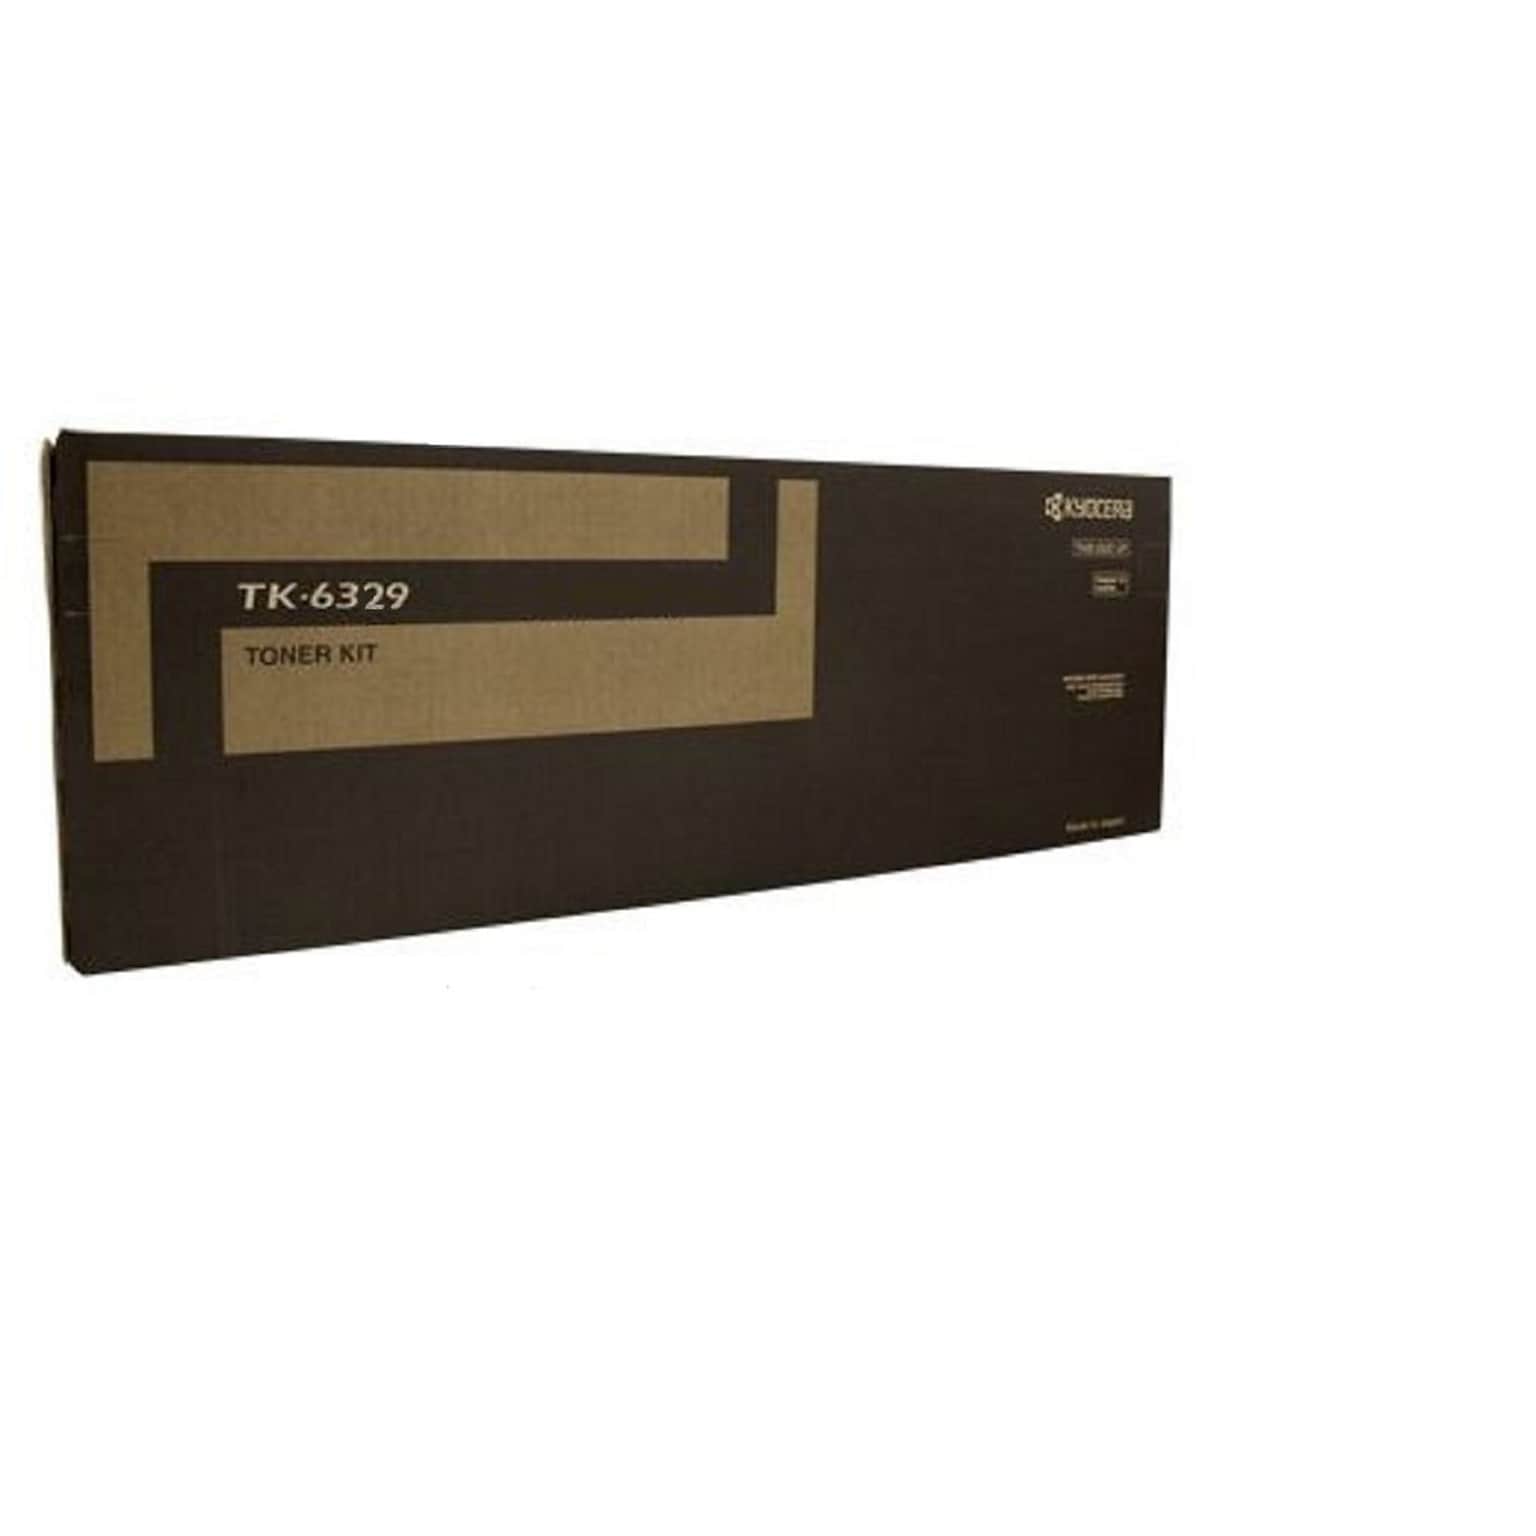 Kyocera/TK-6329/Black Toner Cartridge (KYOTK6329), | Quill.com